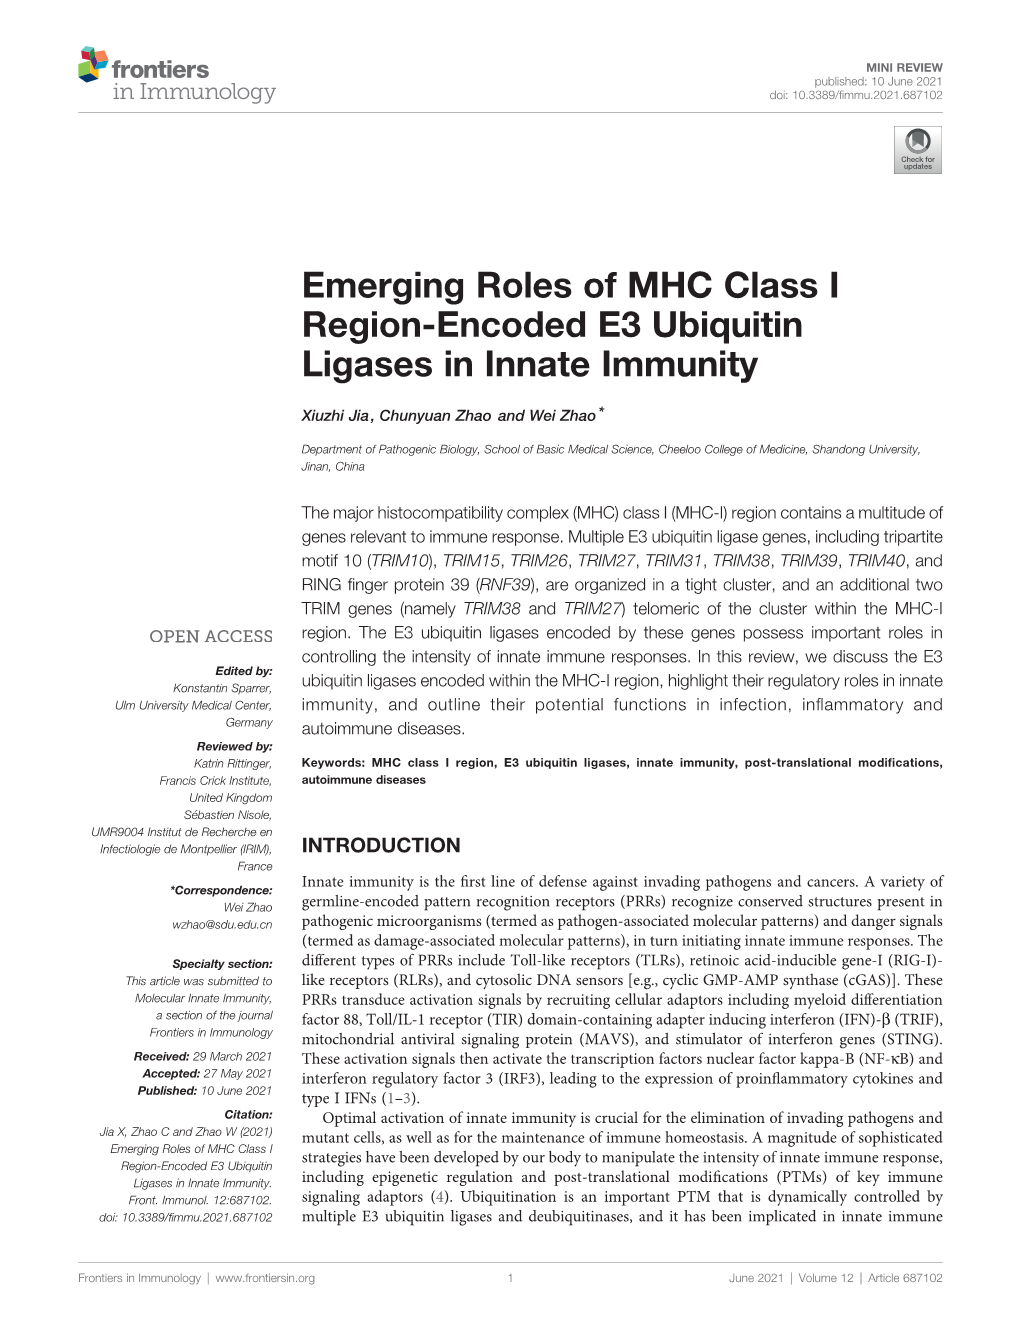 Emerging Roles of MHC Class I Region-Encoded E3 Ubiquitin Ligases in Innate Immunity